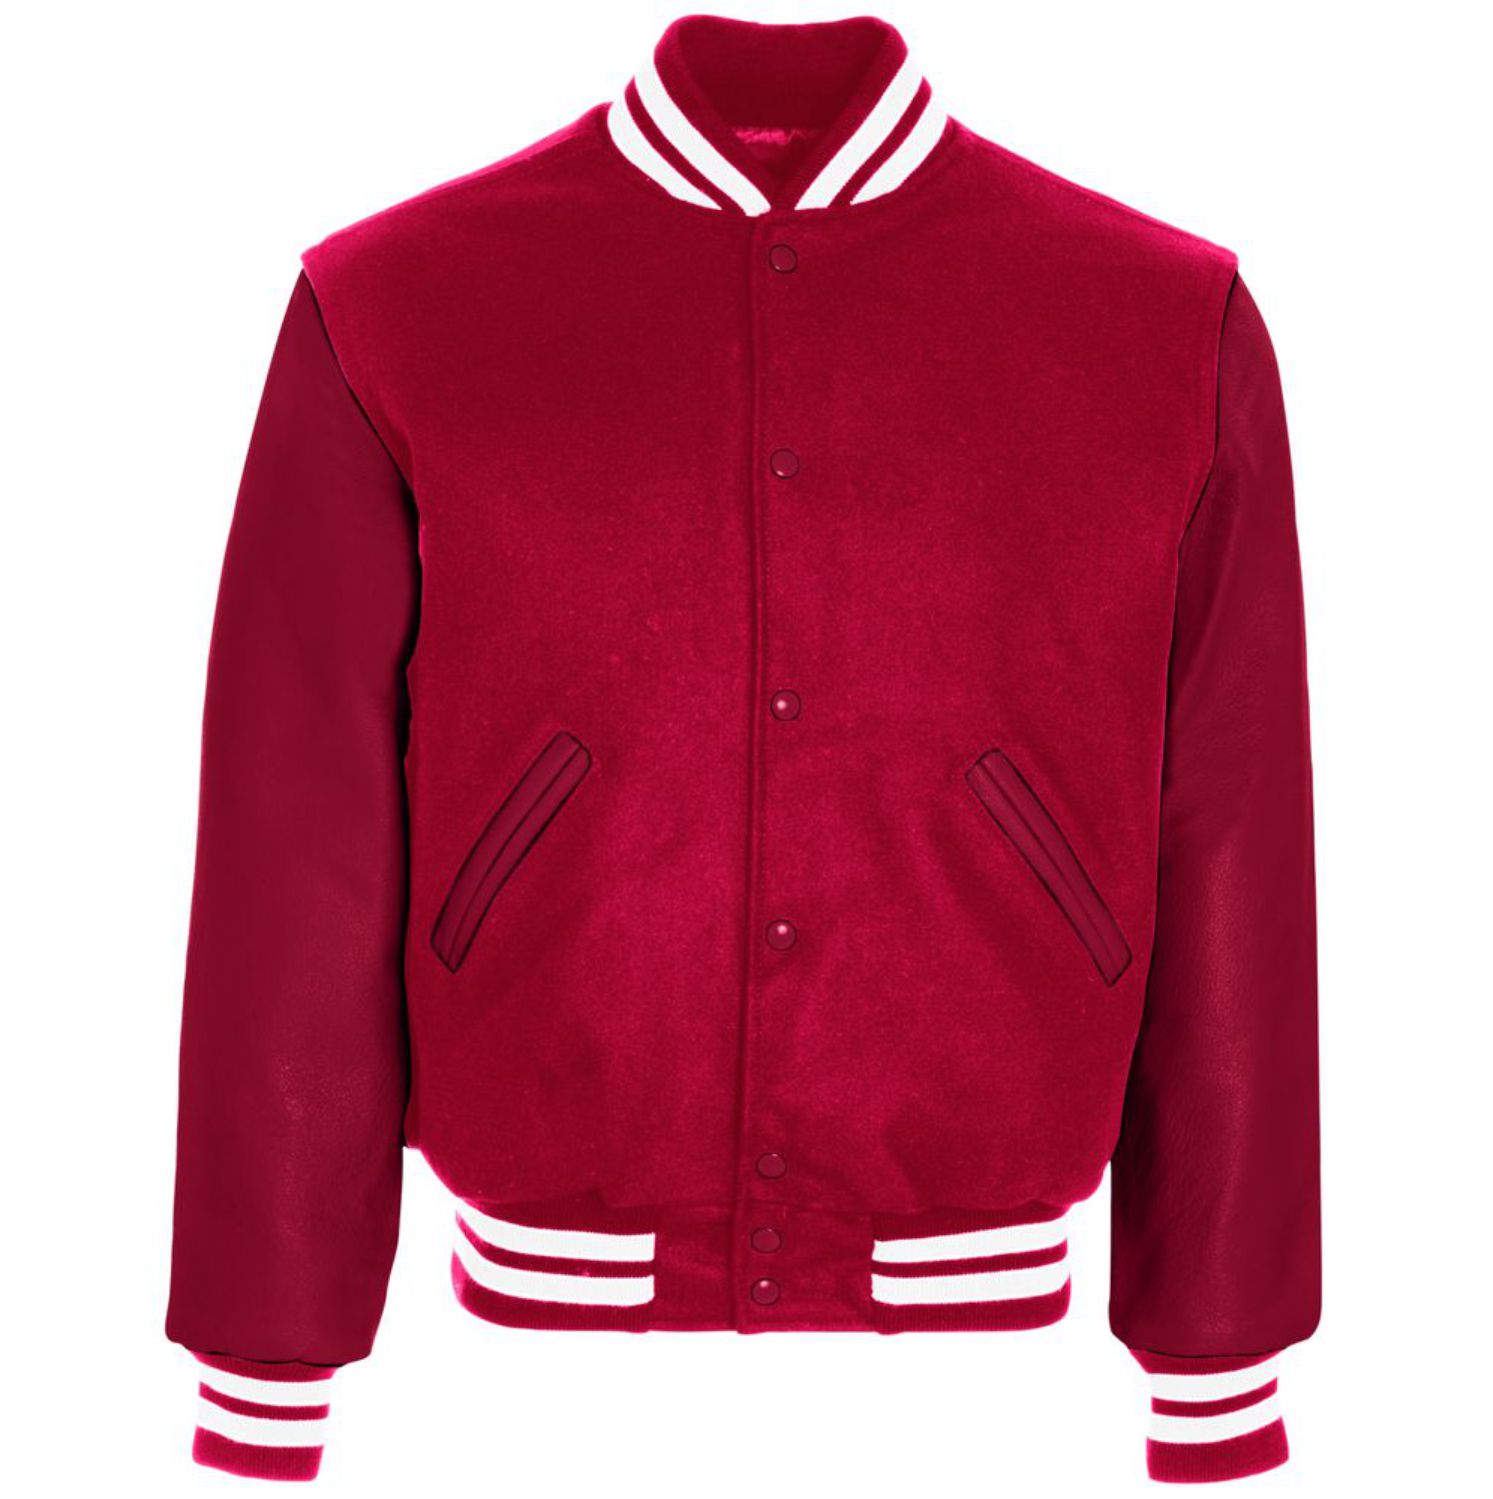 Holloway Varsity Jacket #224183 Scarlet / Scarlet / White